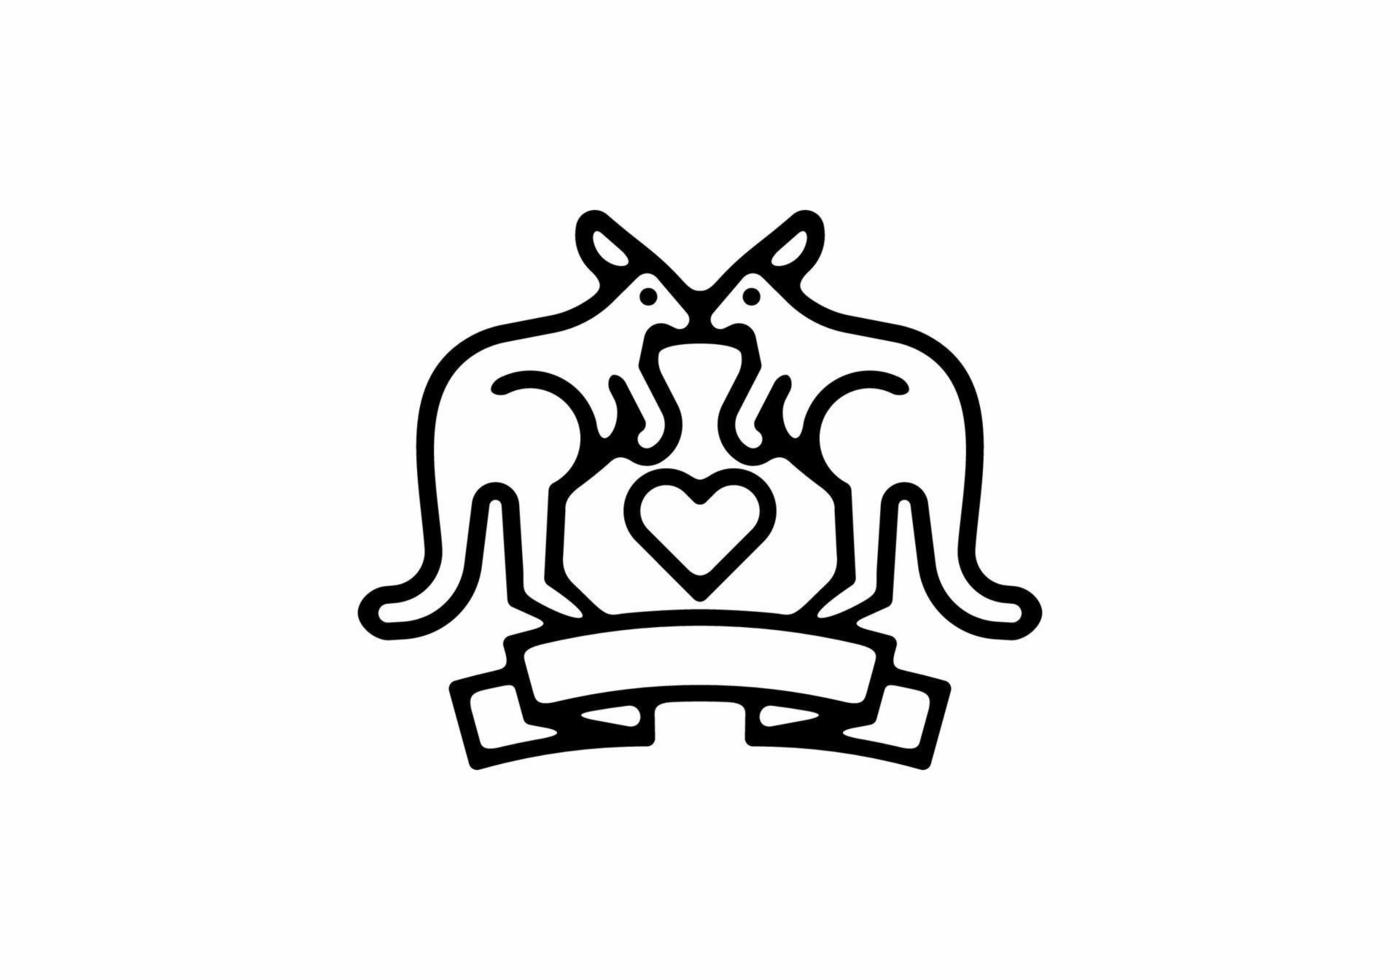 Twin kangaroo with love sign line art illustration tattoo vector